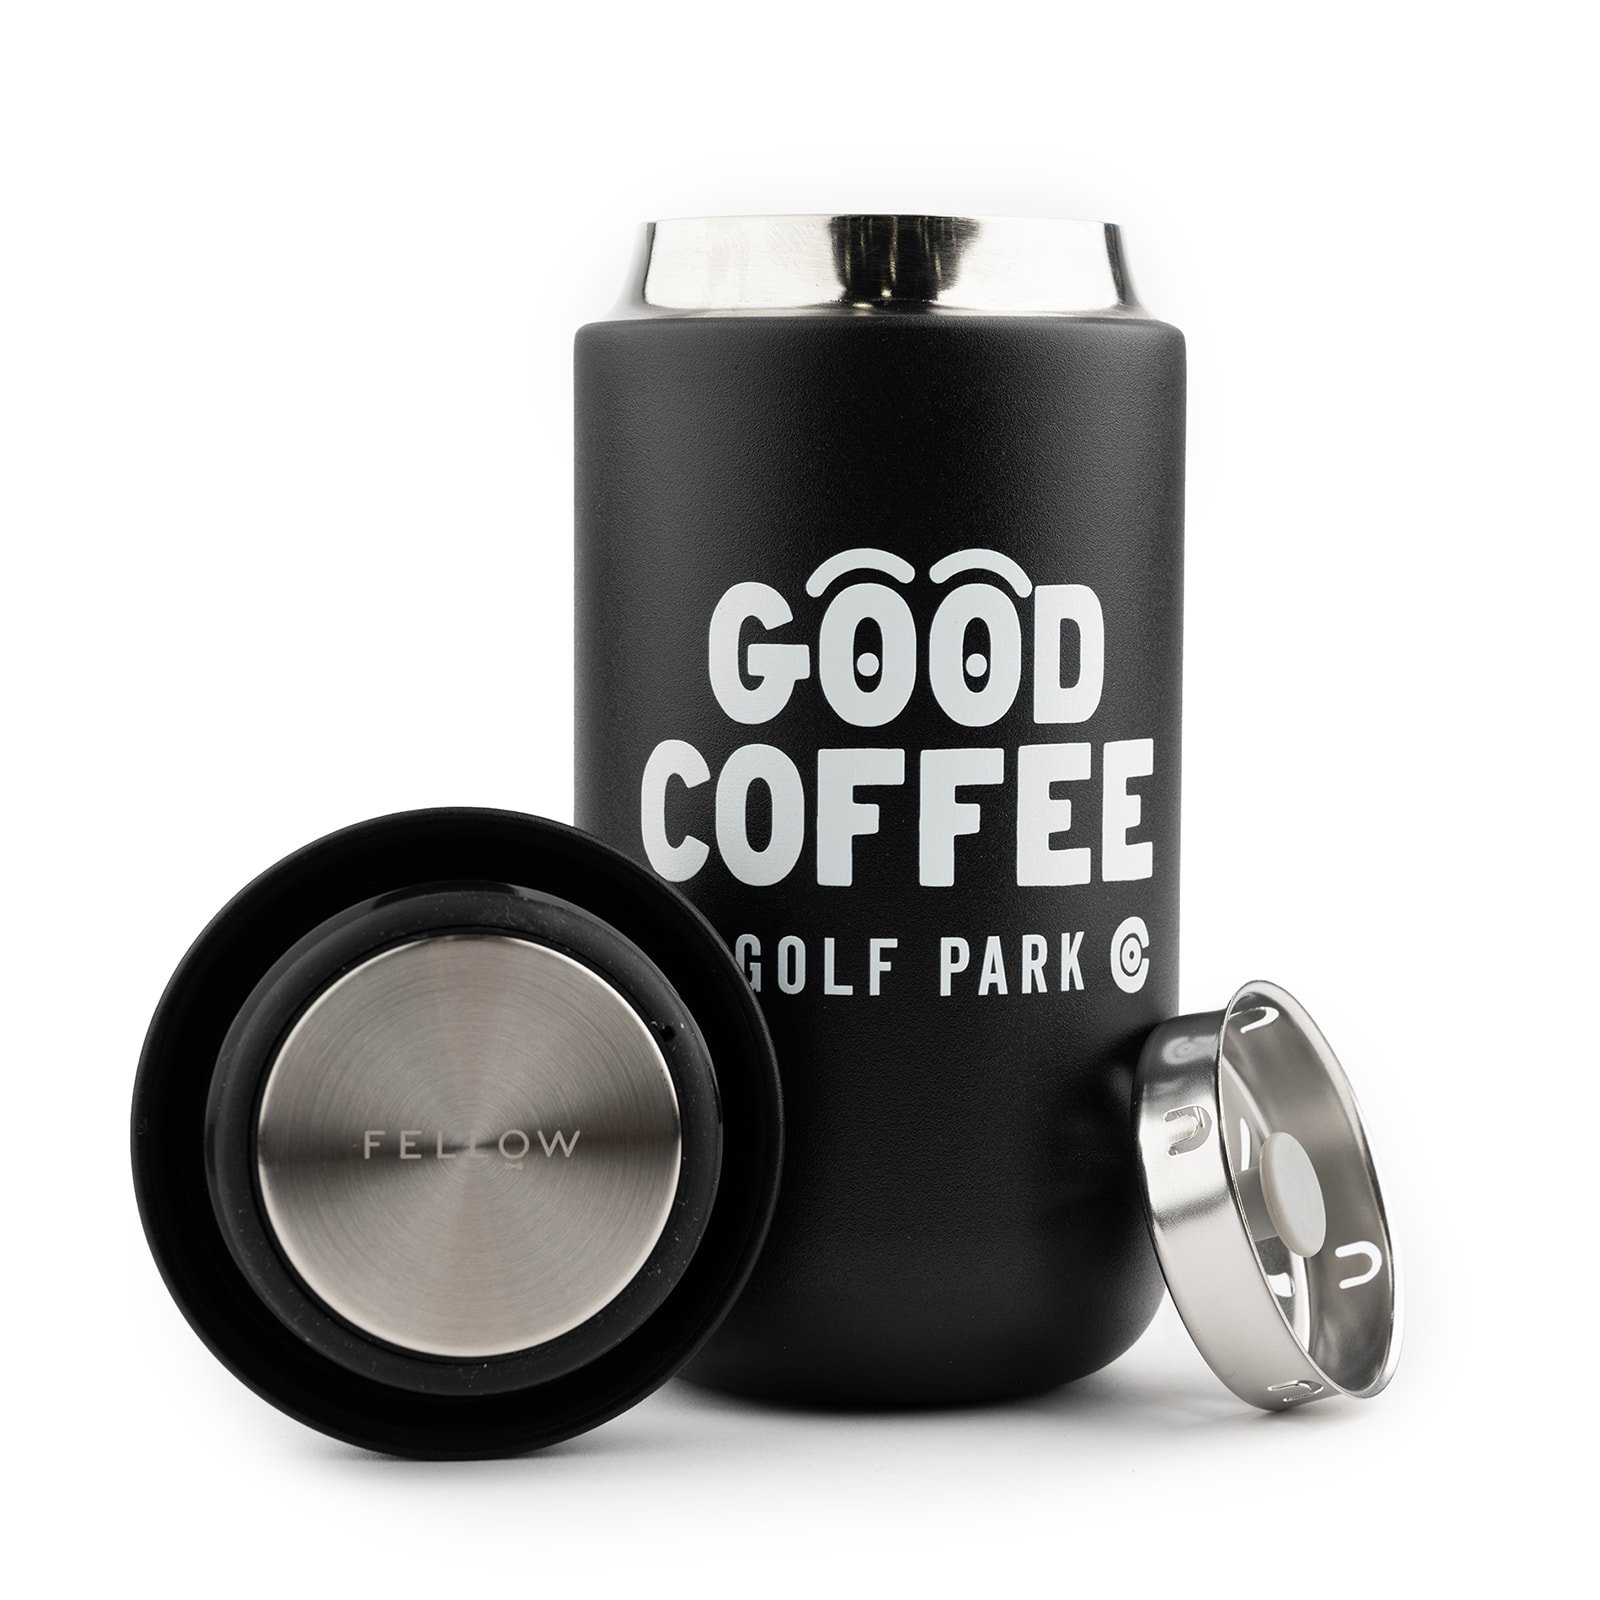 Fellow Carter Coffee Mug Stainless steel taste ceramic coating